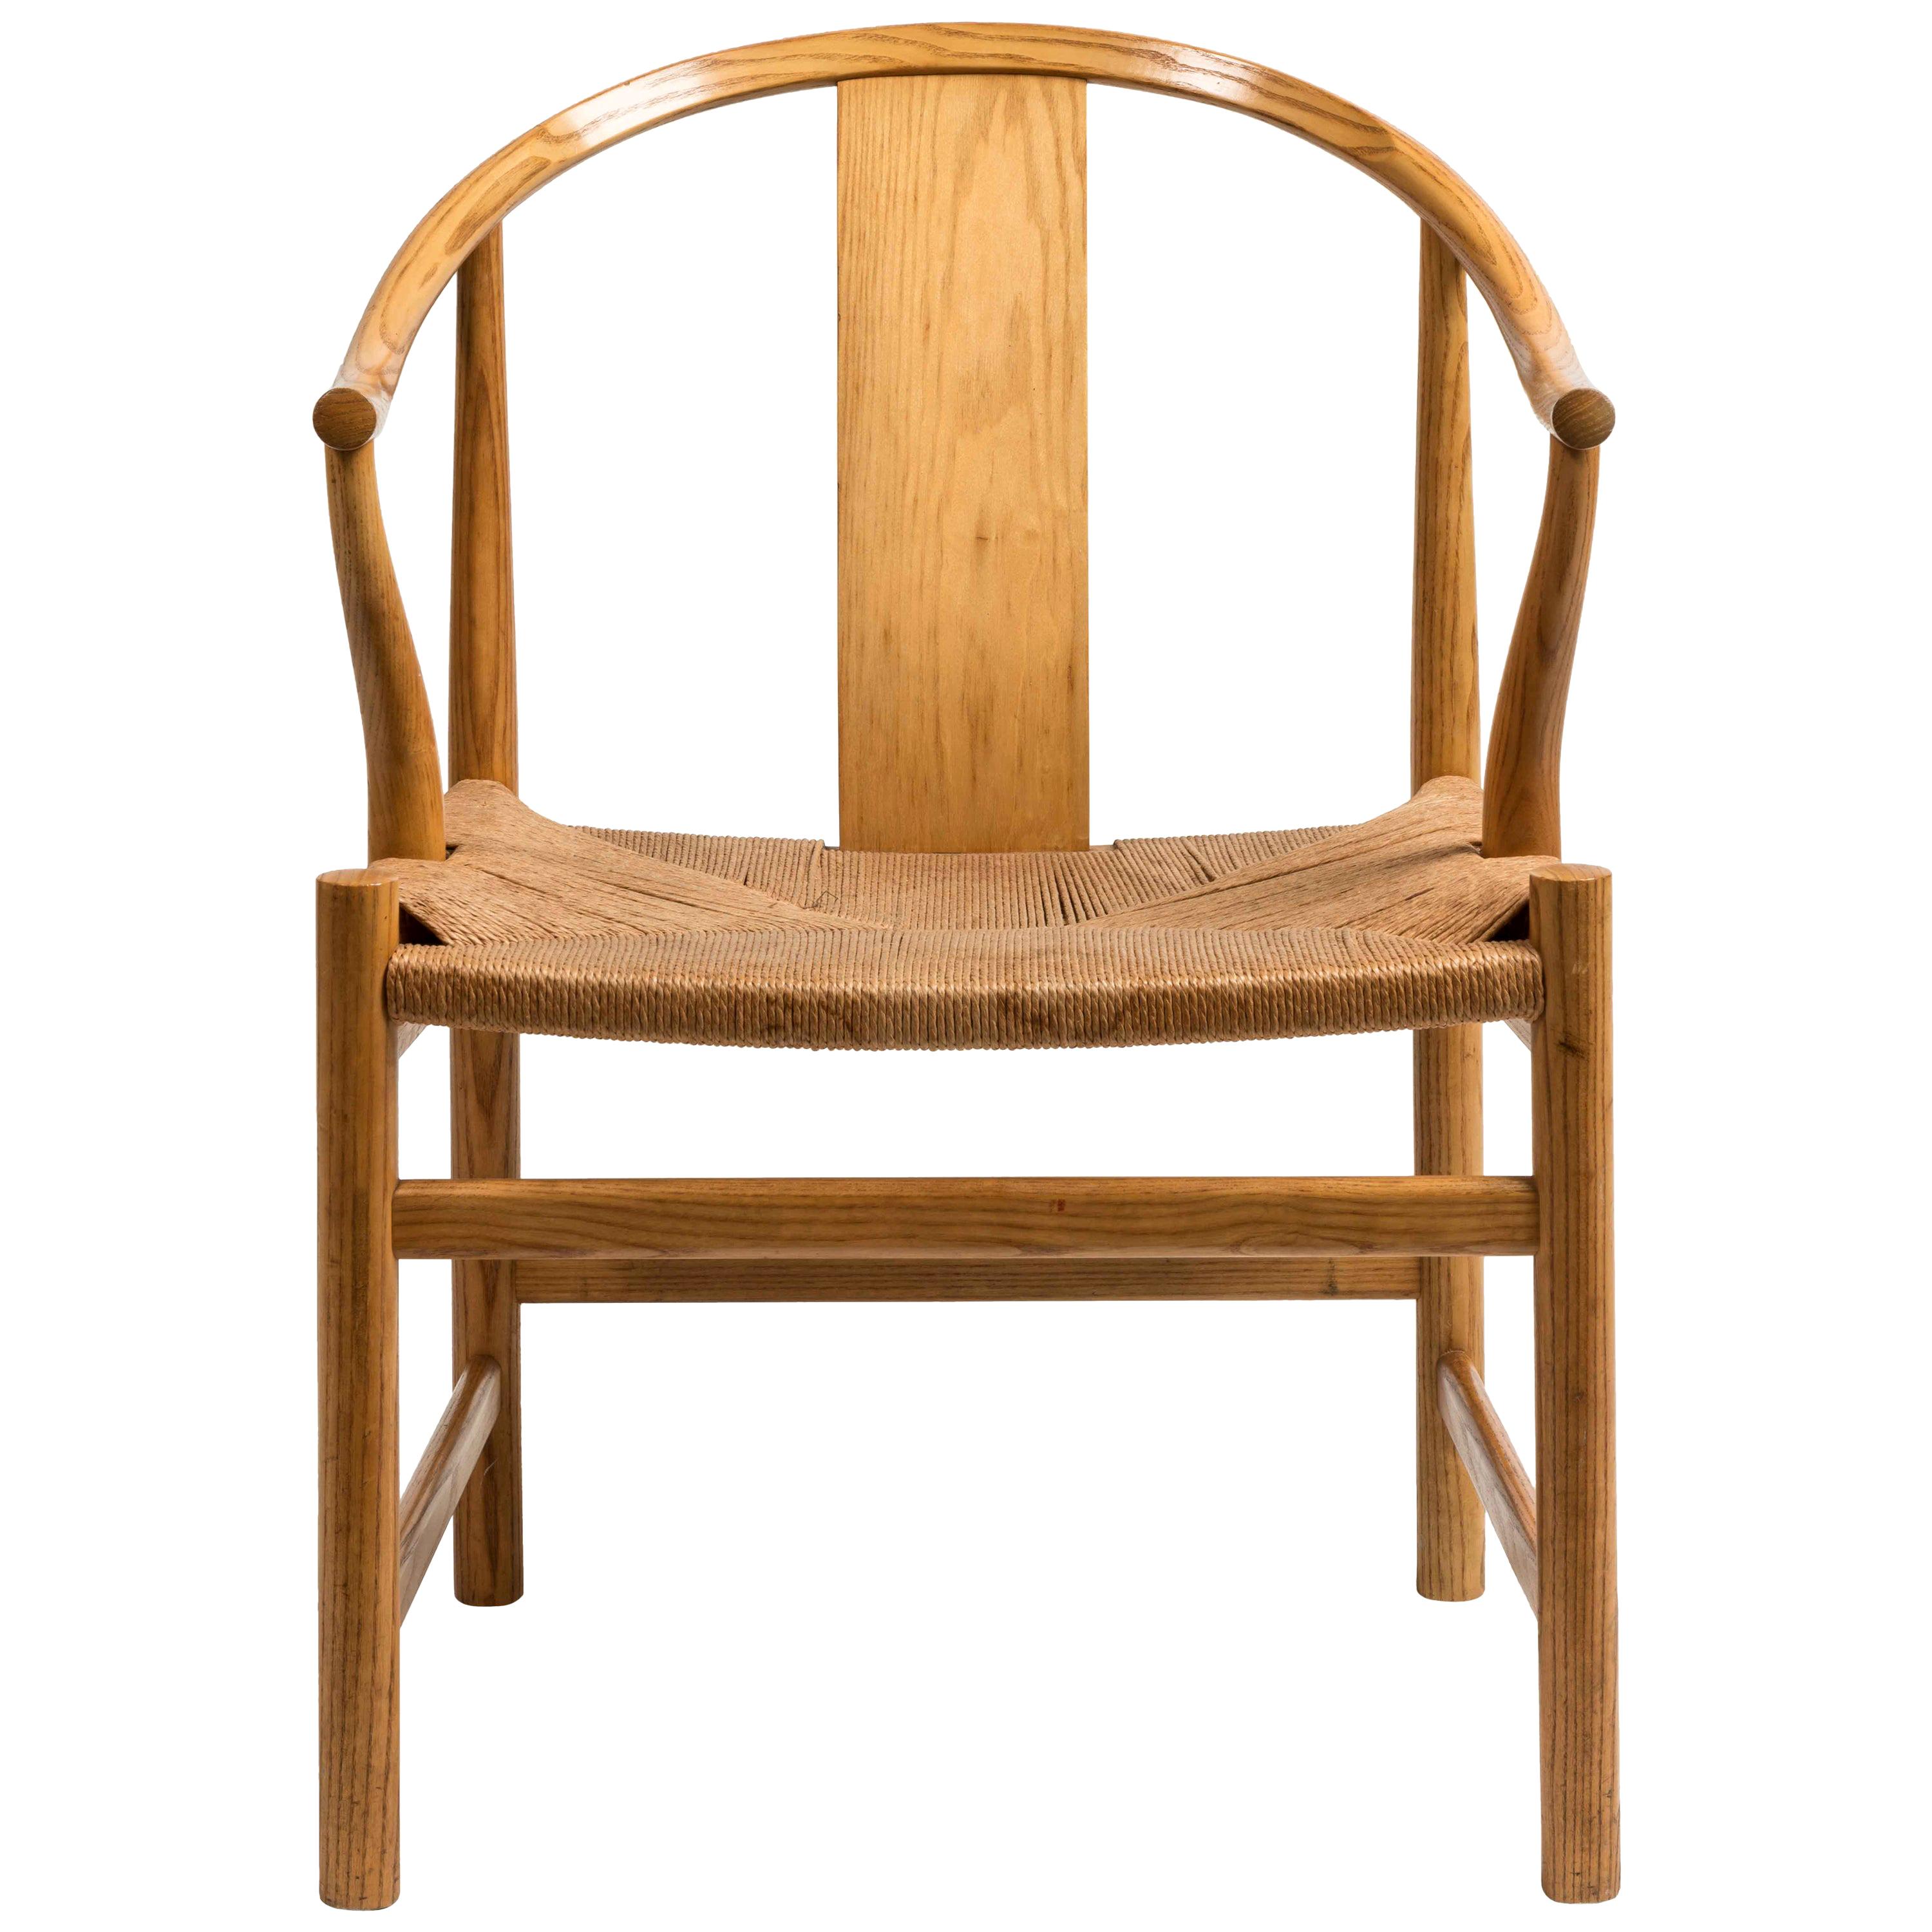 PP66 "Chinese Chair" by Hans J. Wegner for PP Møbler For Sale